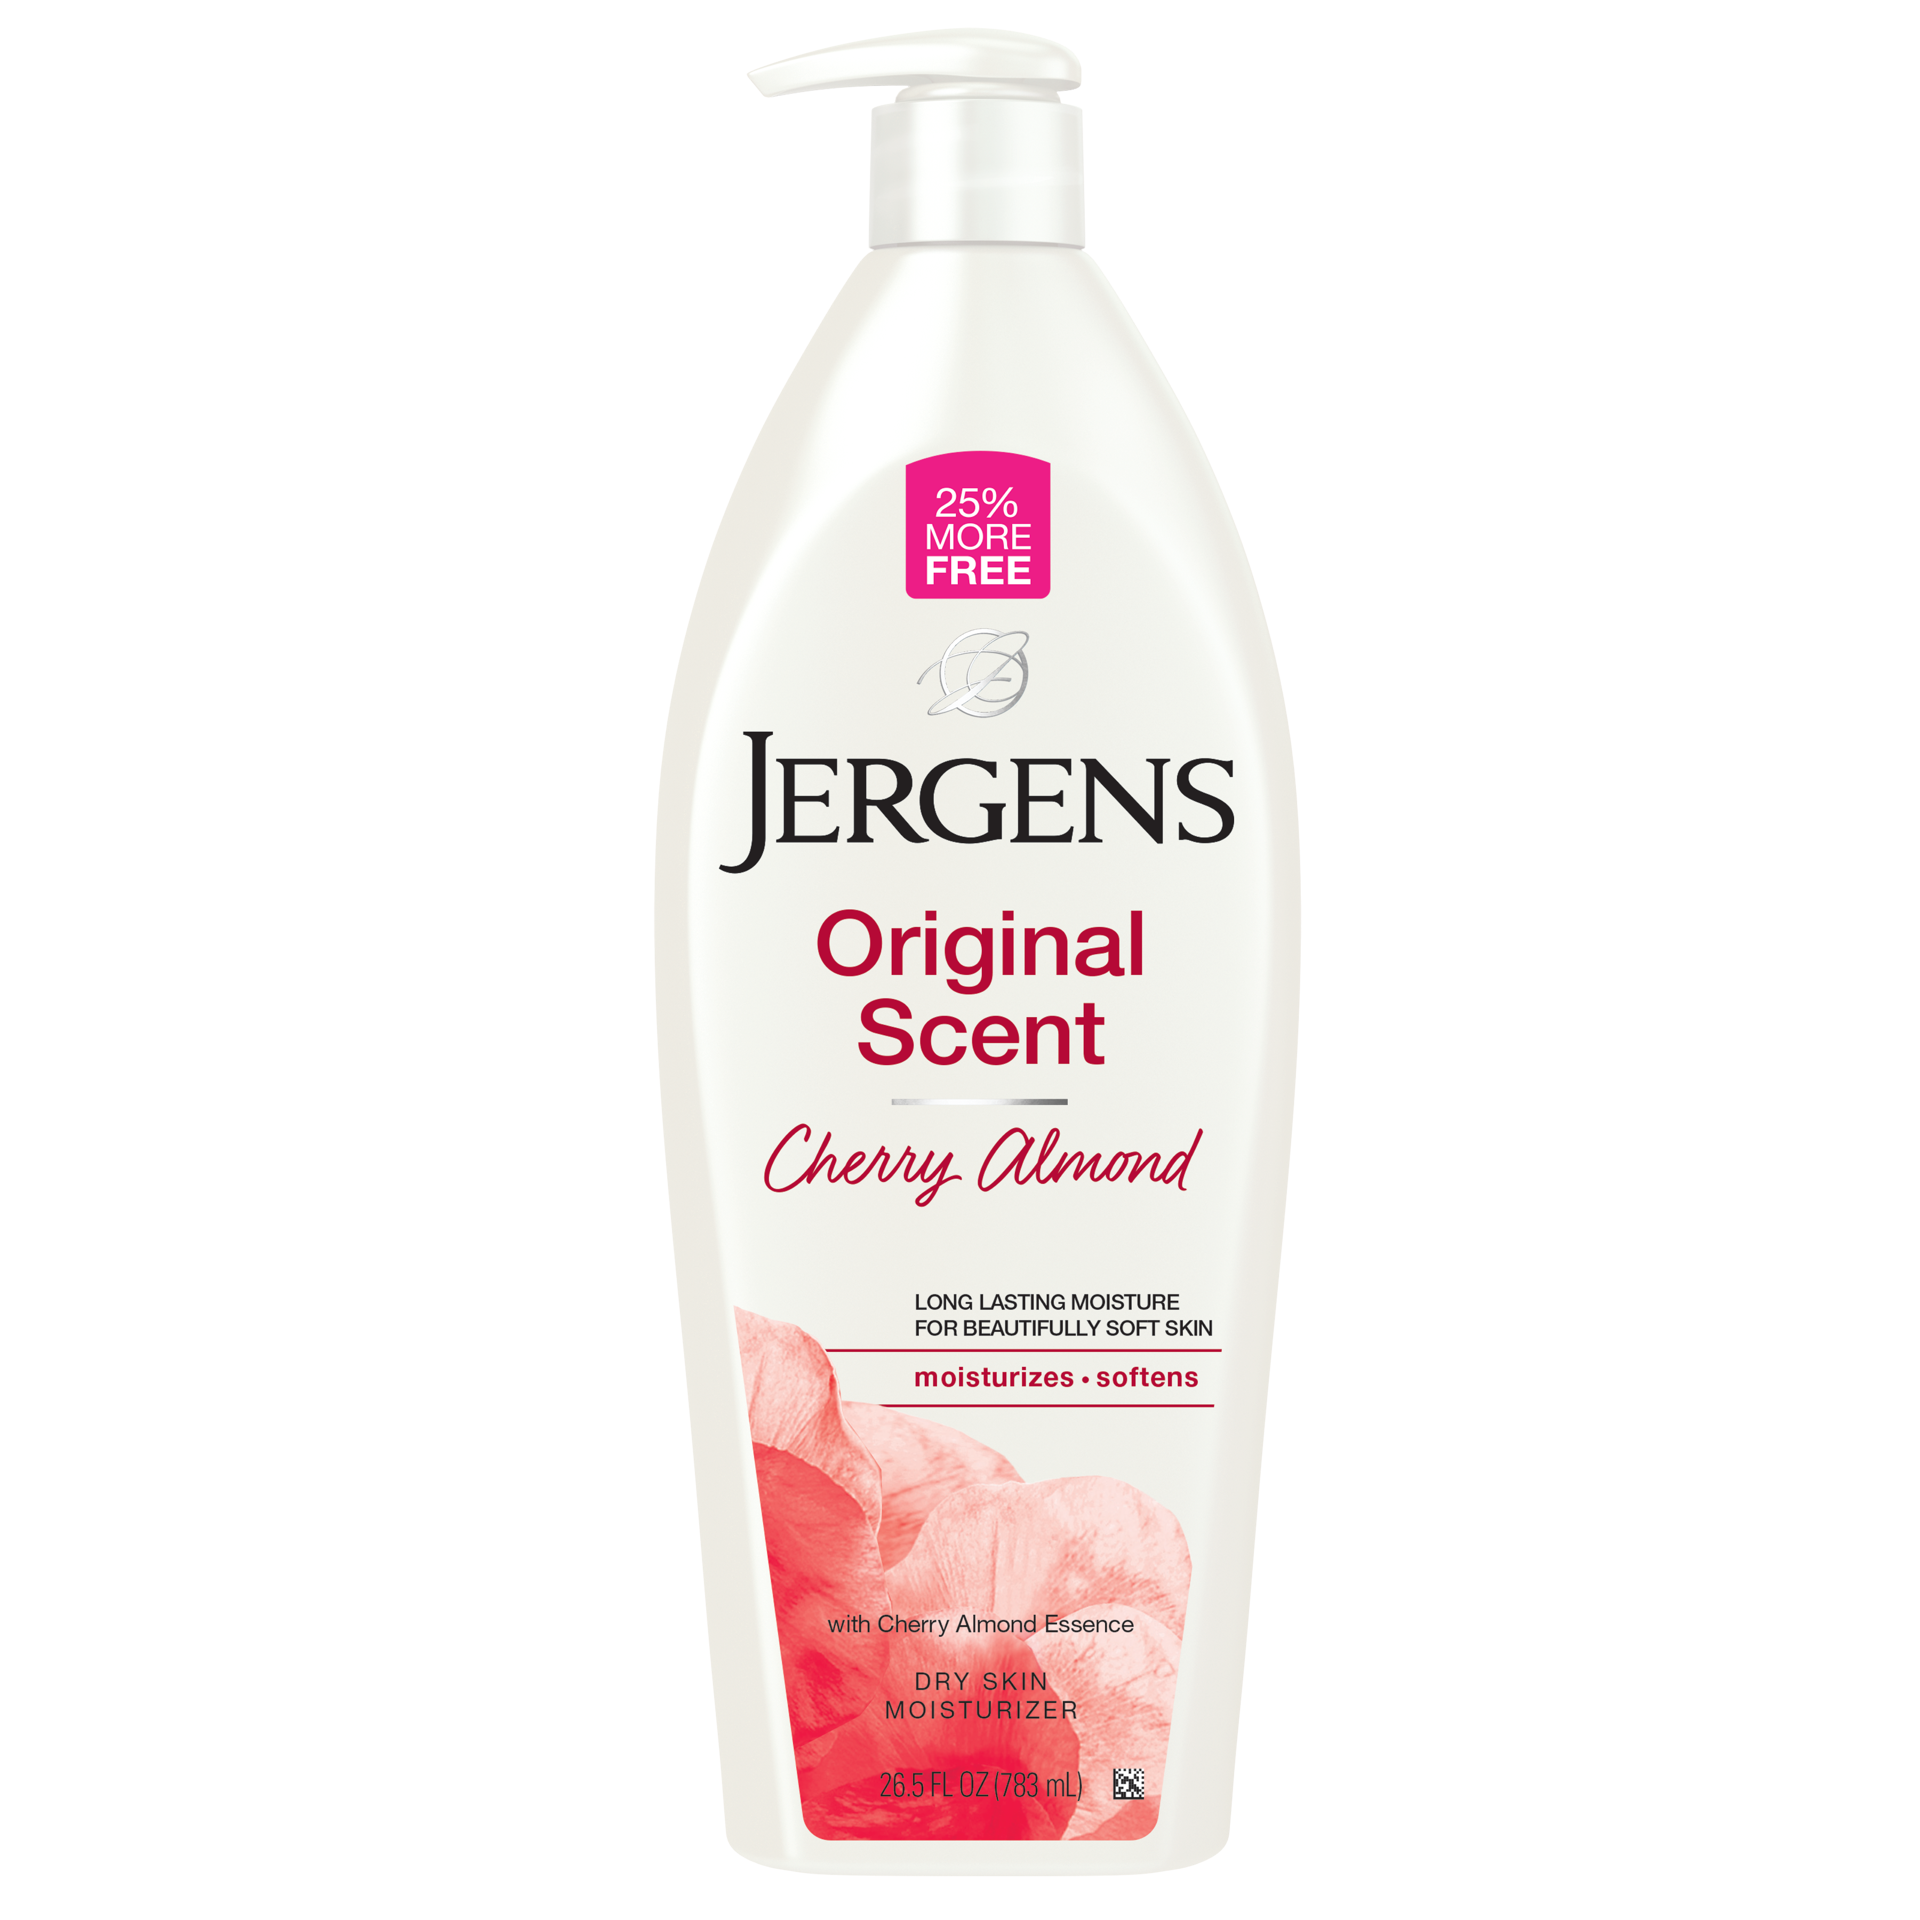 slide 1 of 4, Jergens Moisturizing Lotion, Long- Lasting, Hydrating, Original Scent Dry Skin Moisturizing Body Lotion, with Cherry Almond Essence, 26.5 fl oz, 1 ct